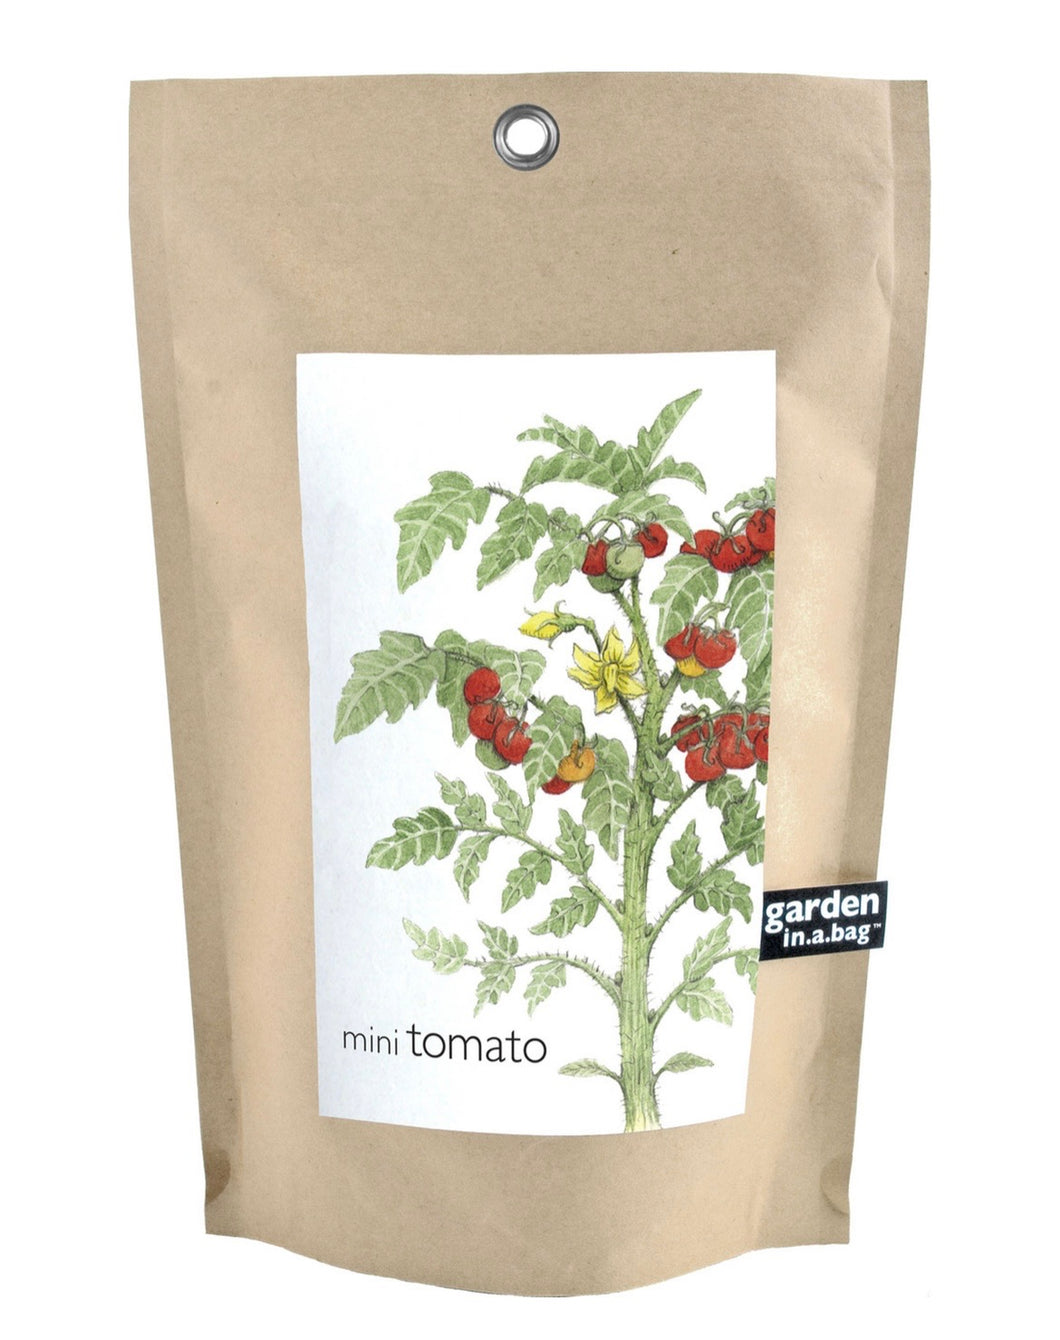 Tomato- Kids Garden in a bag